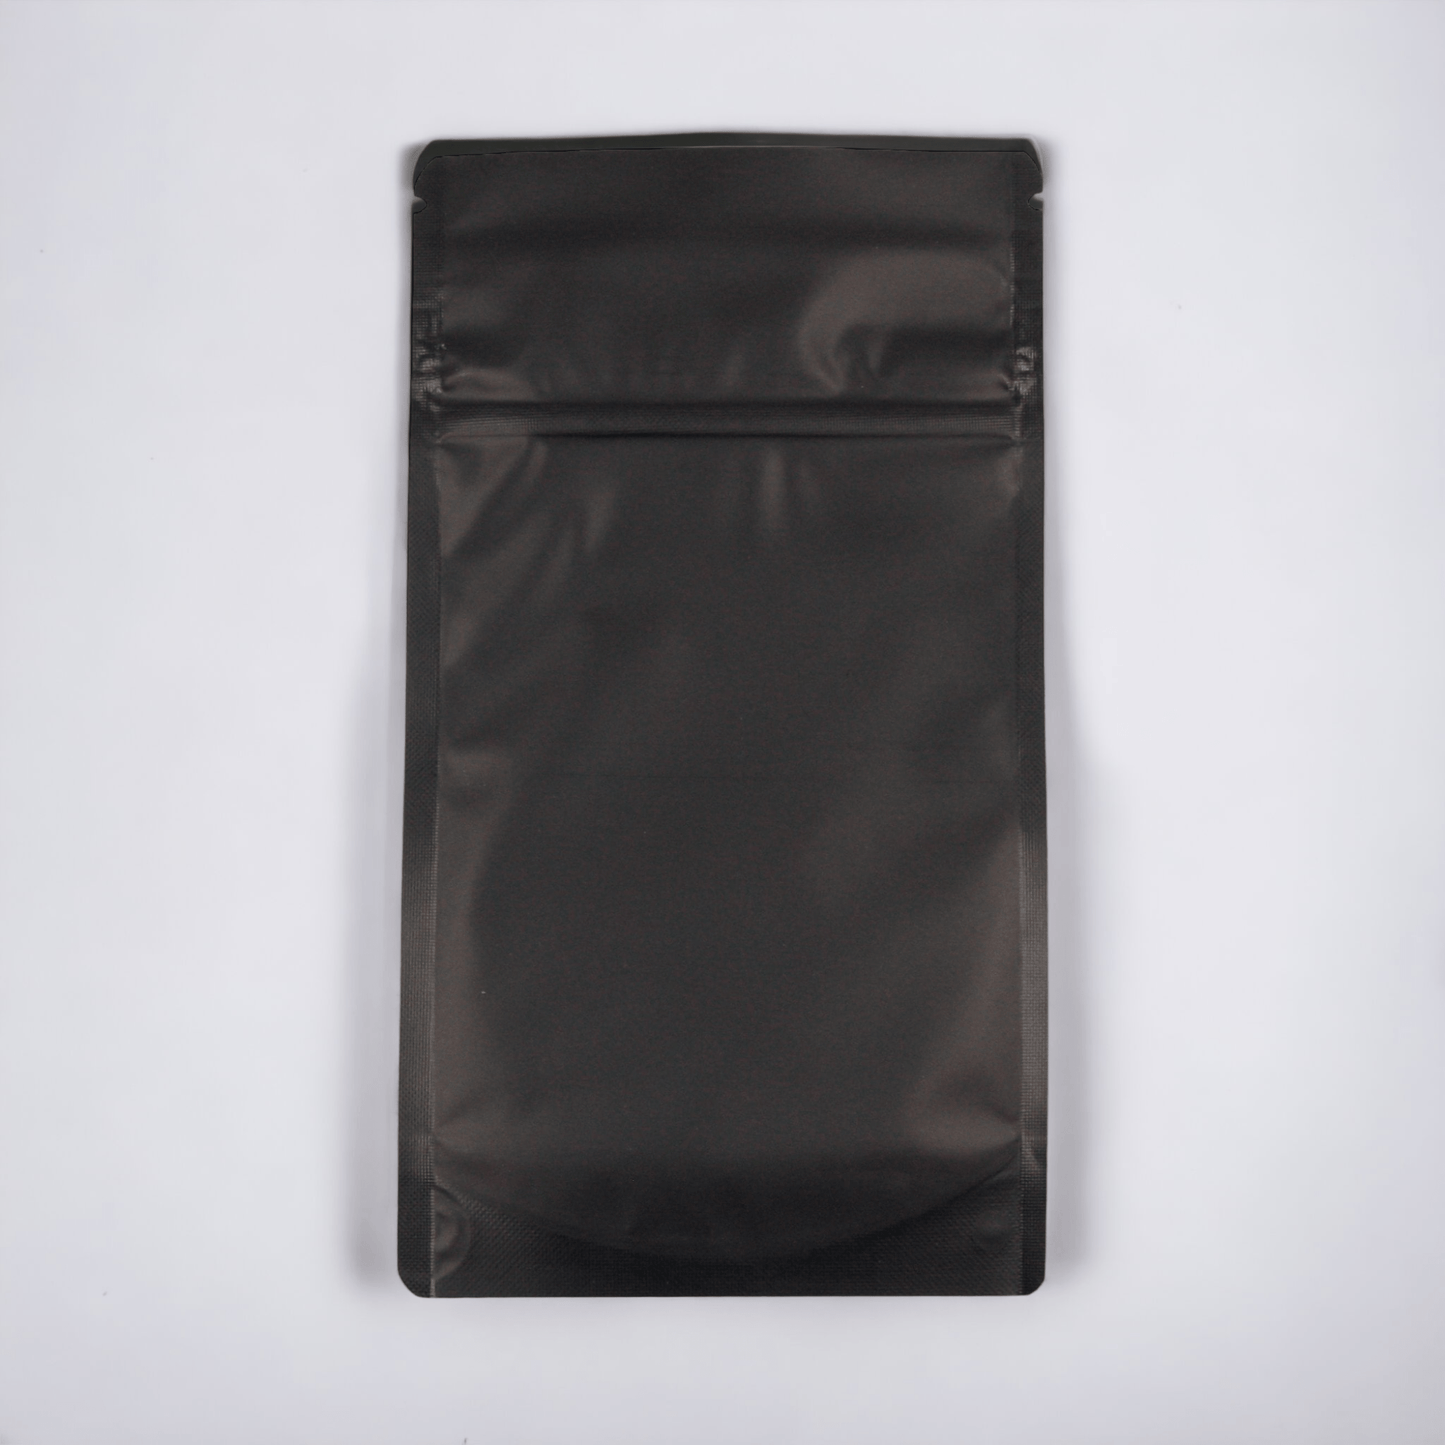 Bag King Child-Resistant Opaque Mylar Bag (1/4th oz)